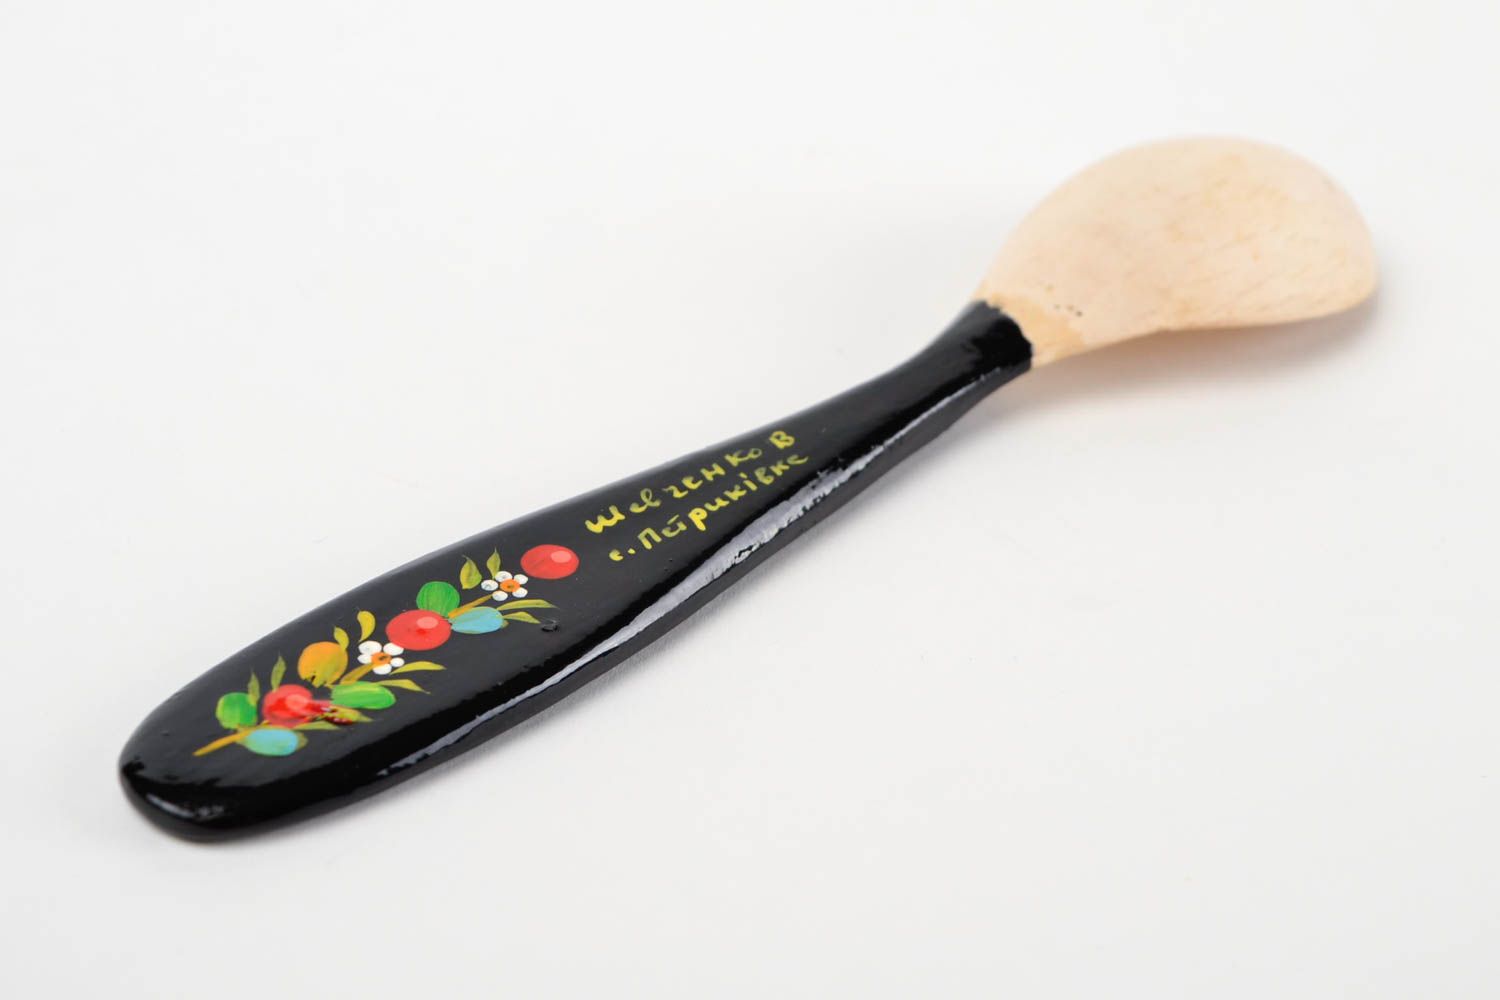 Handmade spoon designer spoon gift ideas unusual spoon decorative use only photo 4